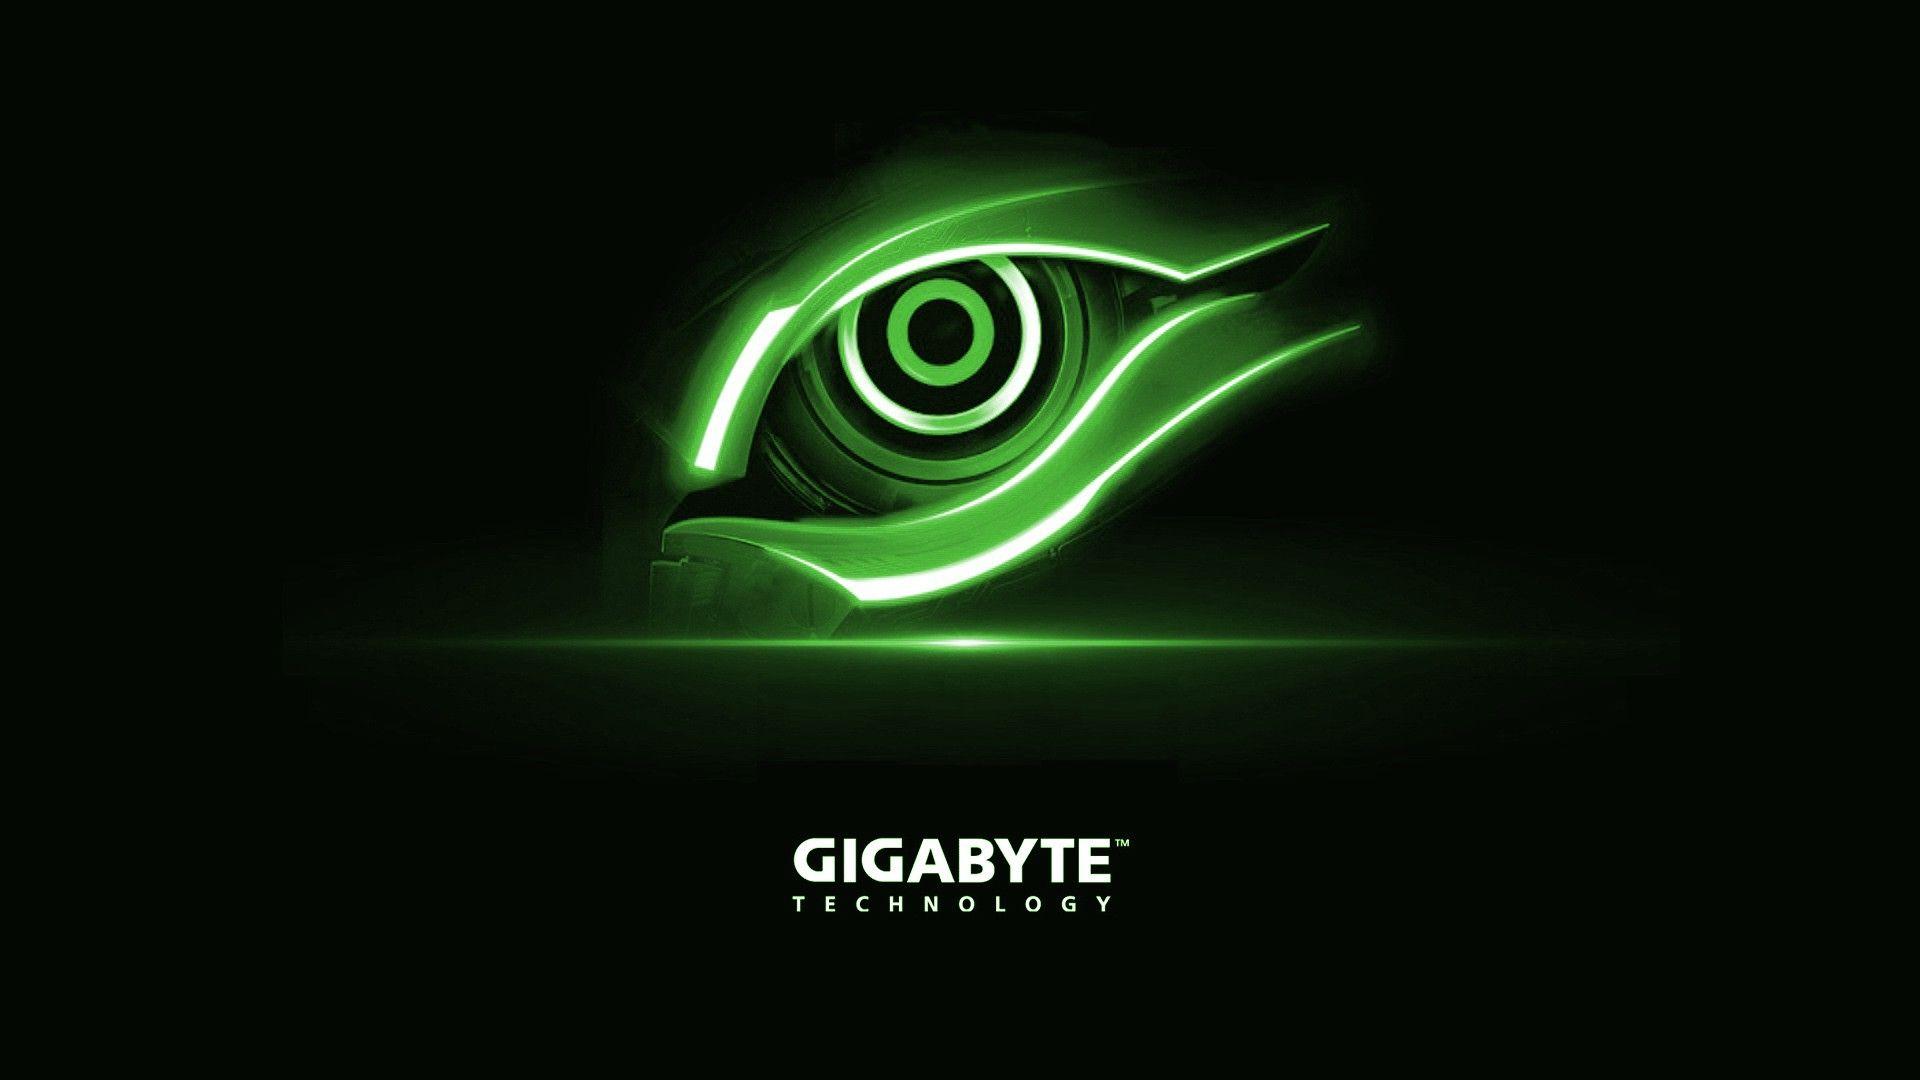 Green Eye Logo - Gigabyte Technology Green Eye Logo Wallpaper free desktop ...